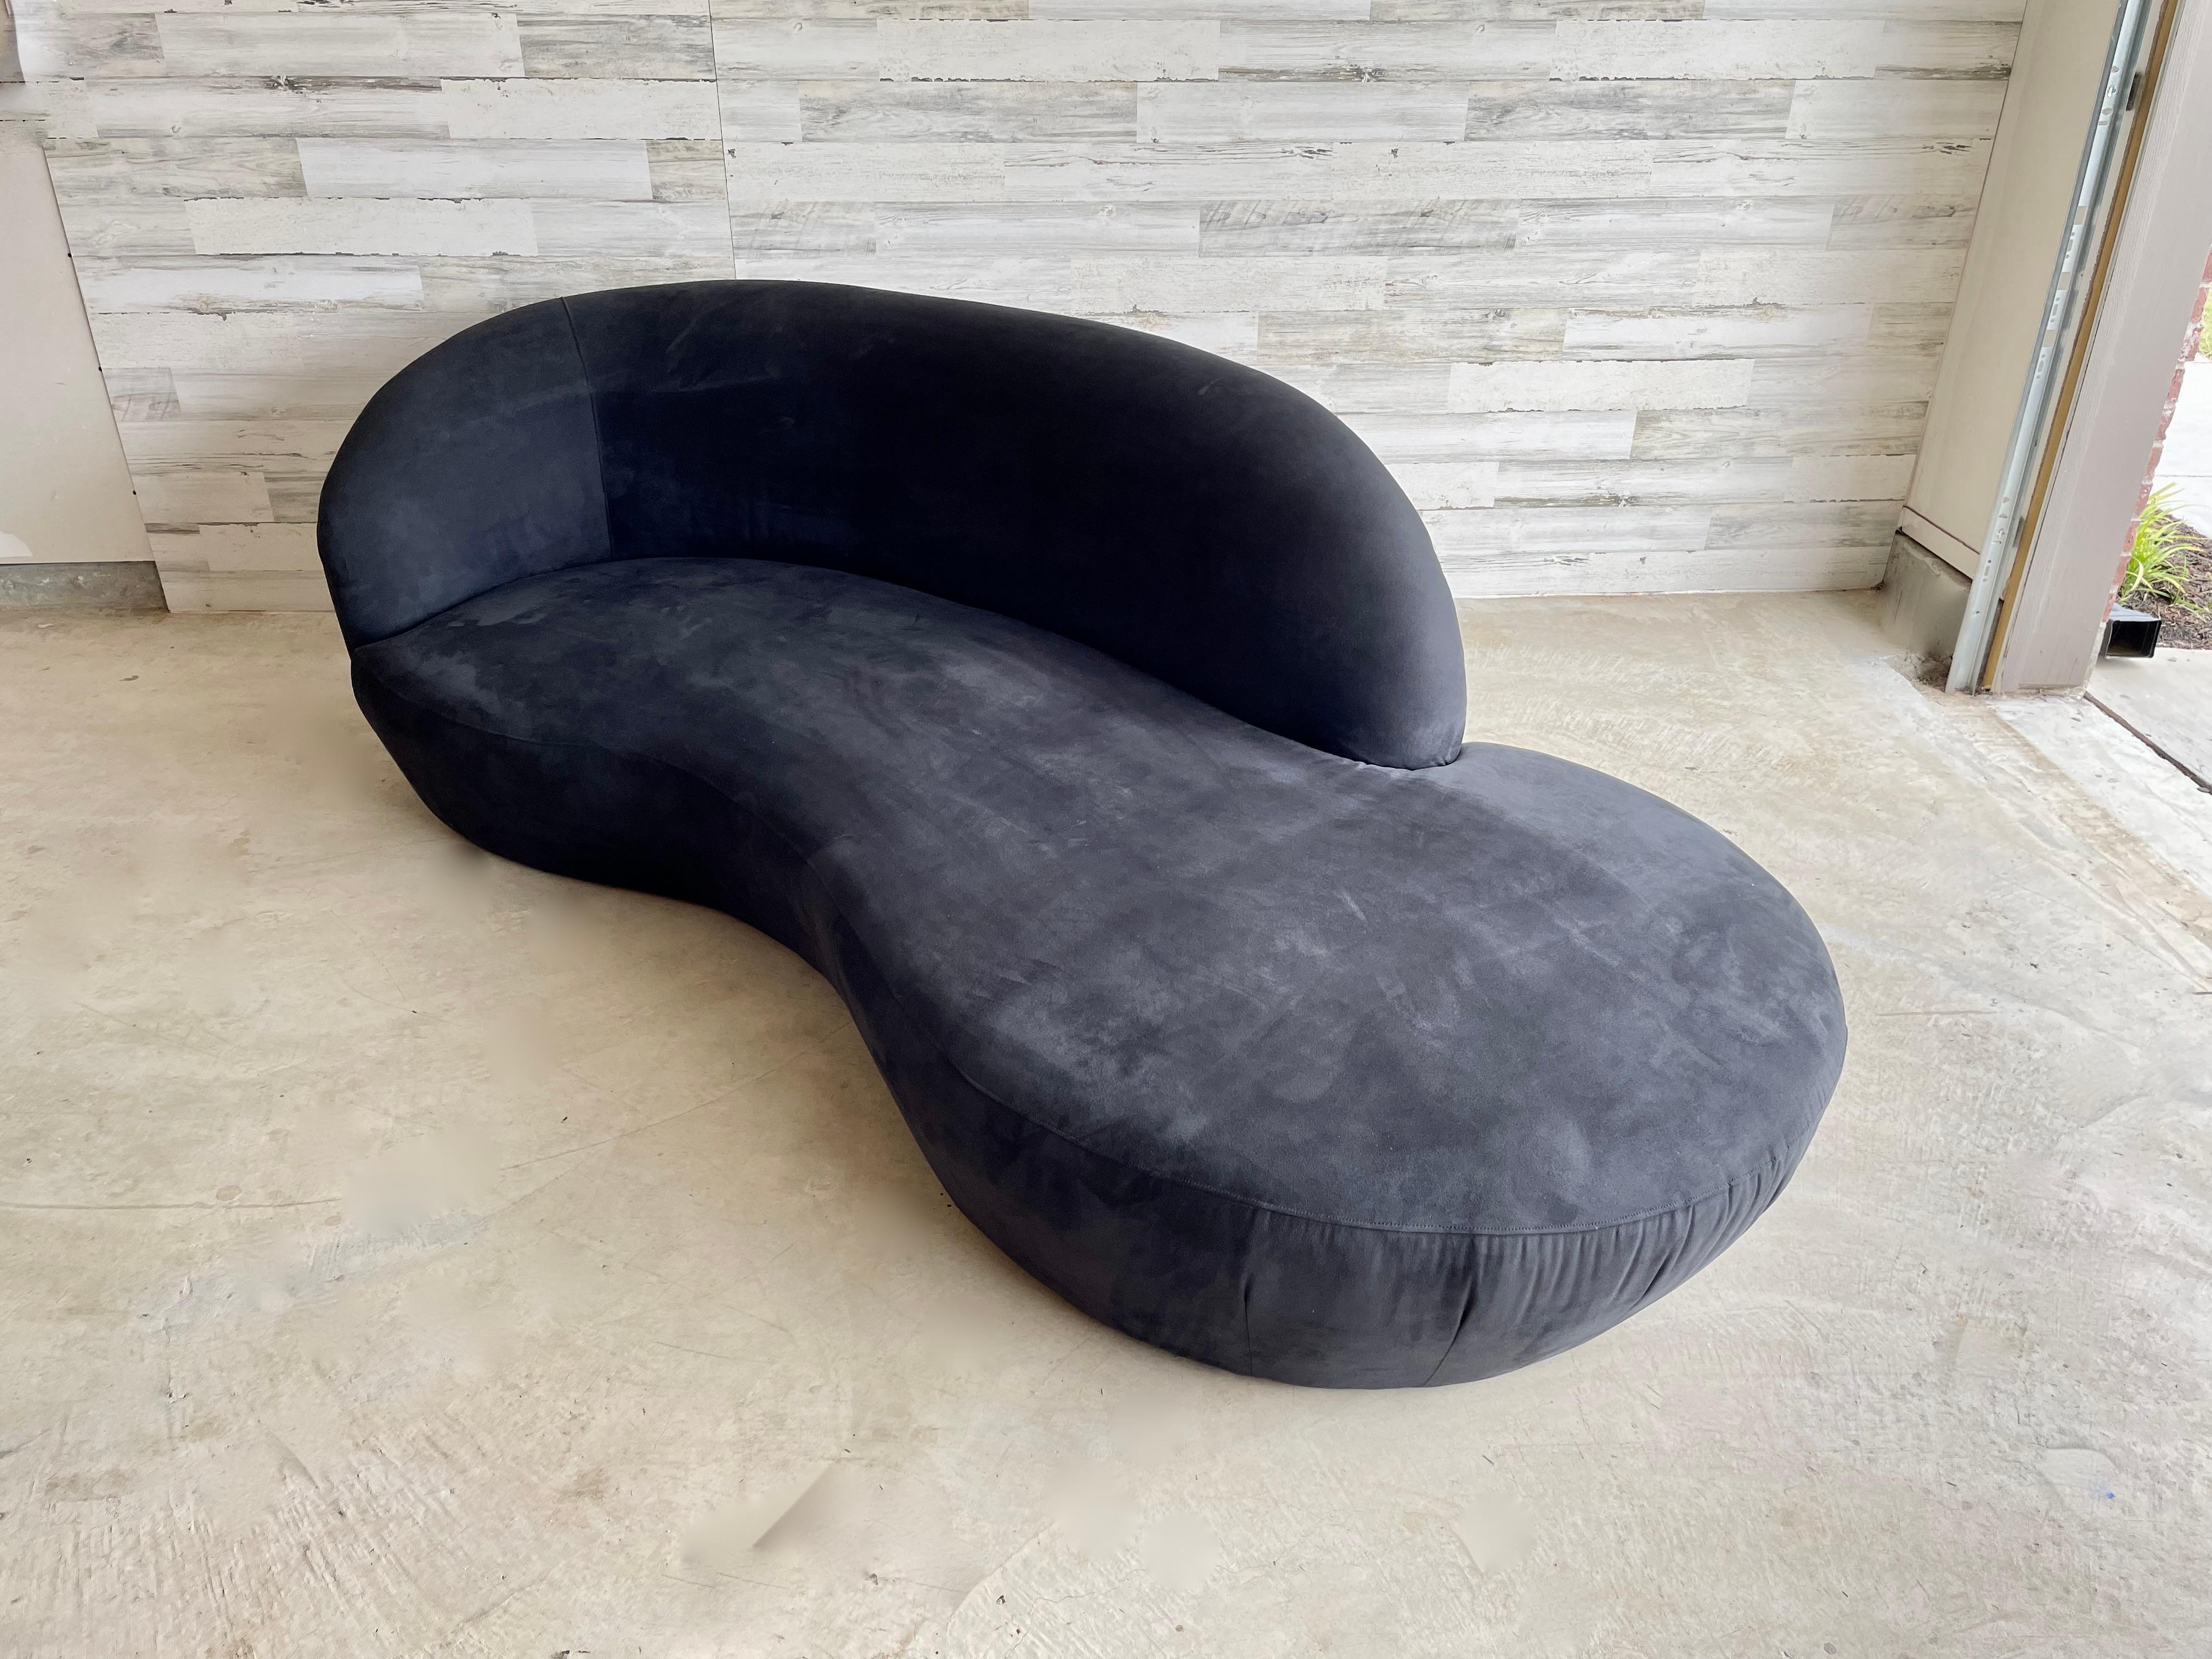 Cloud freeform sofa in black microfiber fabric.